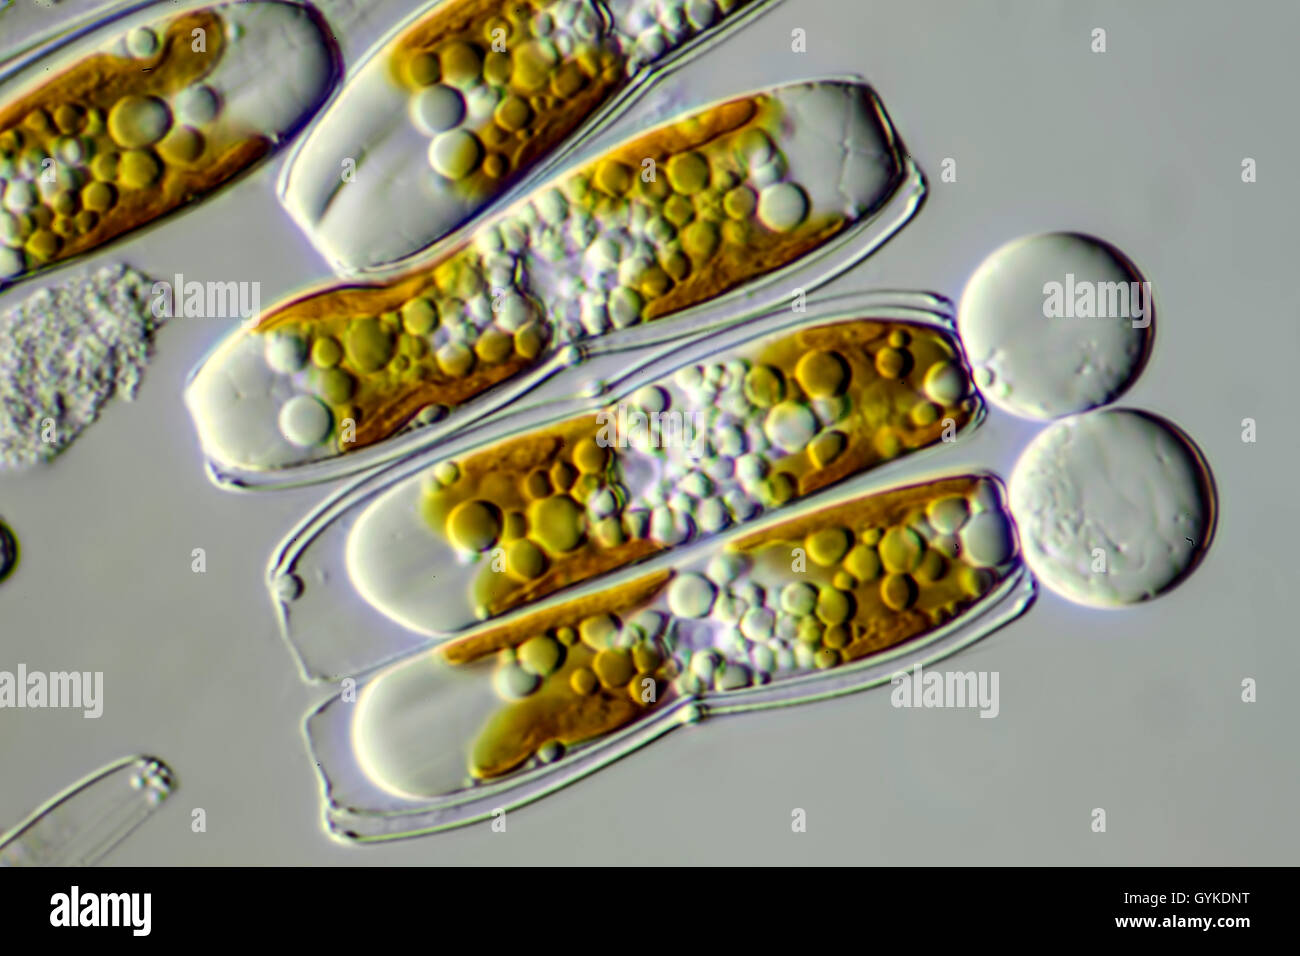 Kieselalge, Kiesel-Alge, Diatomee (Diatomeae), lebende Kieselalgen | (diatomee Diatomeae), vivente diatomee | BLWS419012.jpg [ (c) b Foto Stock